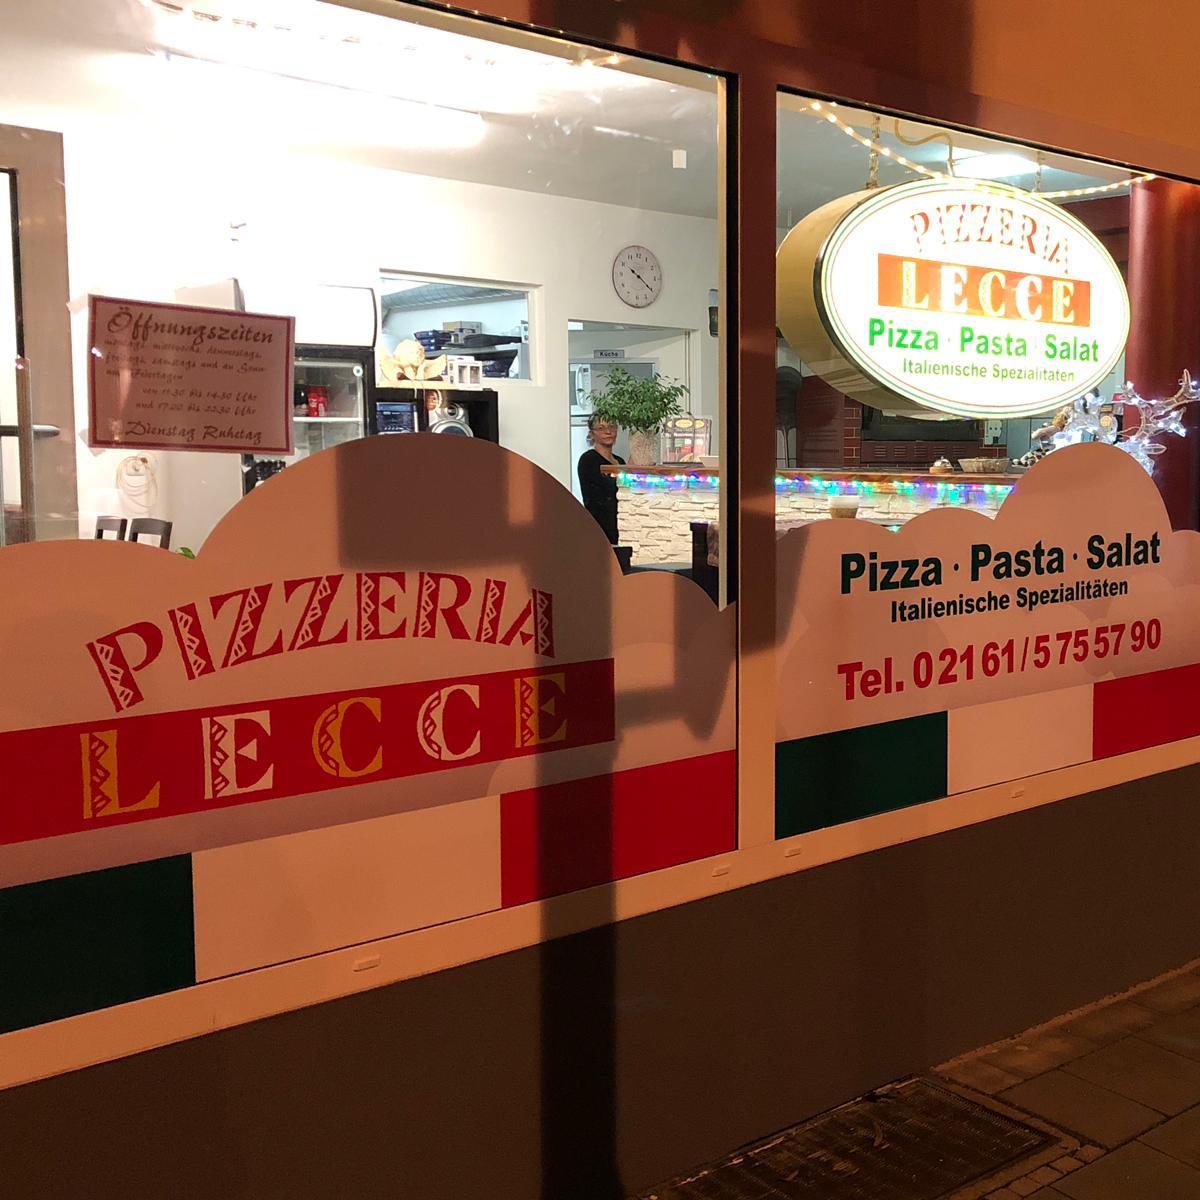 Restaurant "Pizzeria Lecce" in Mönchengladbach